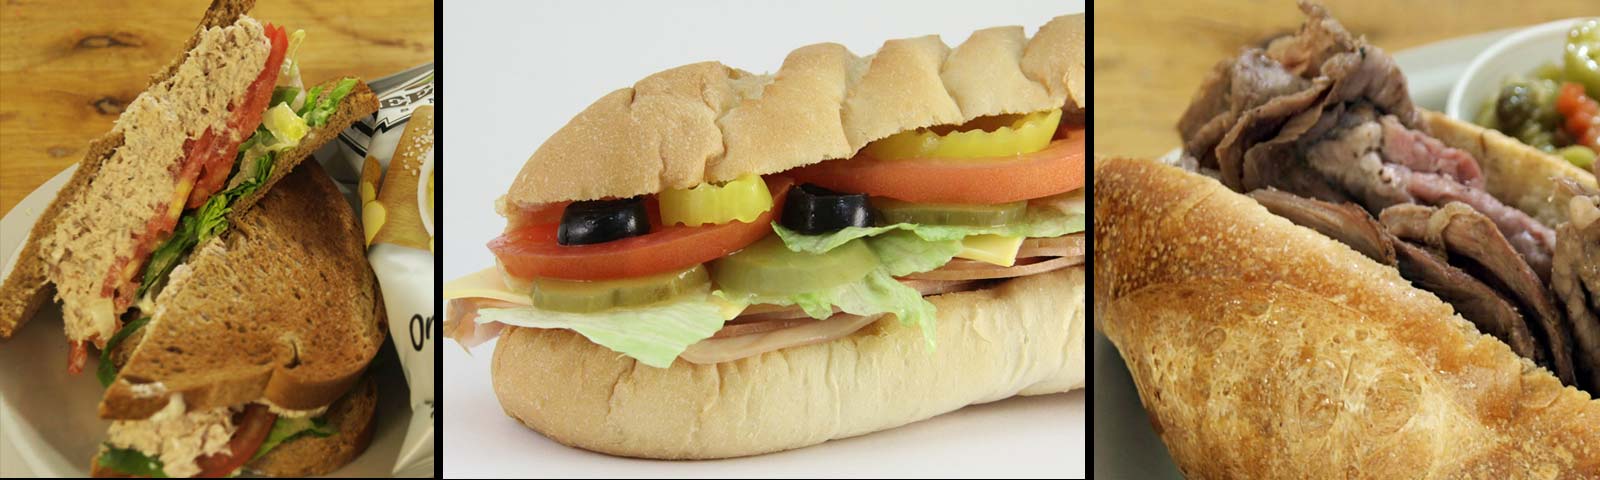 Nino's lunch sandwiches